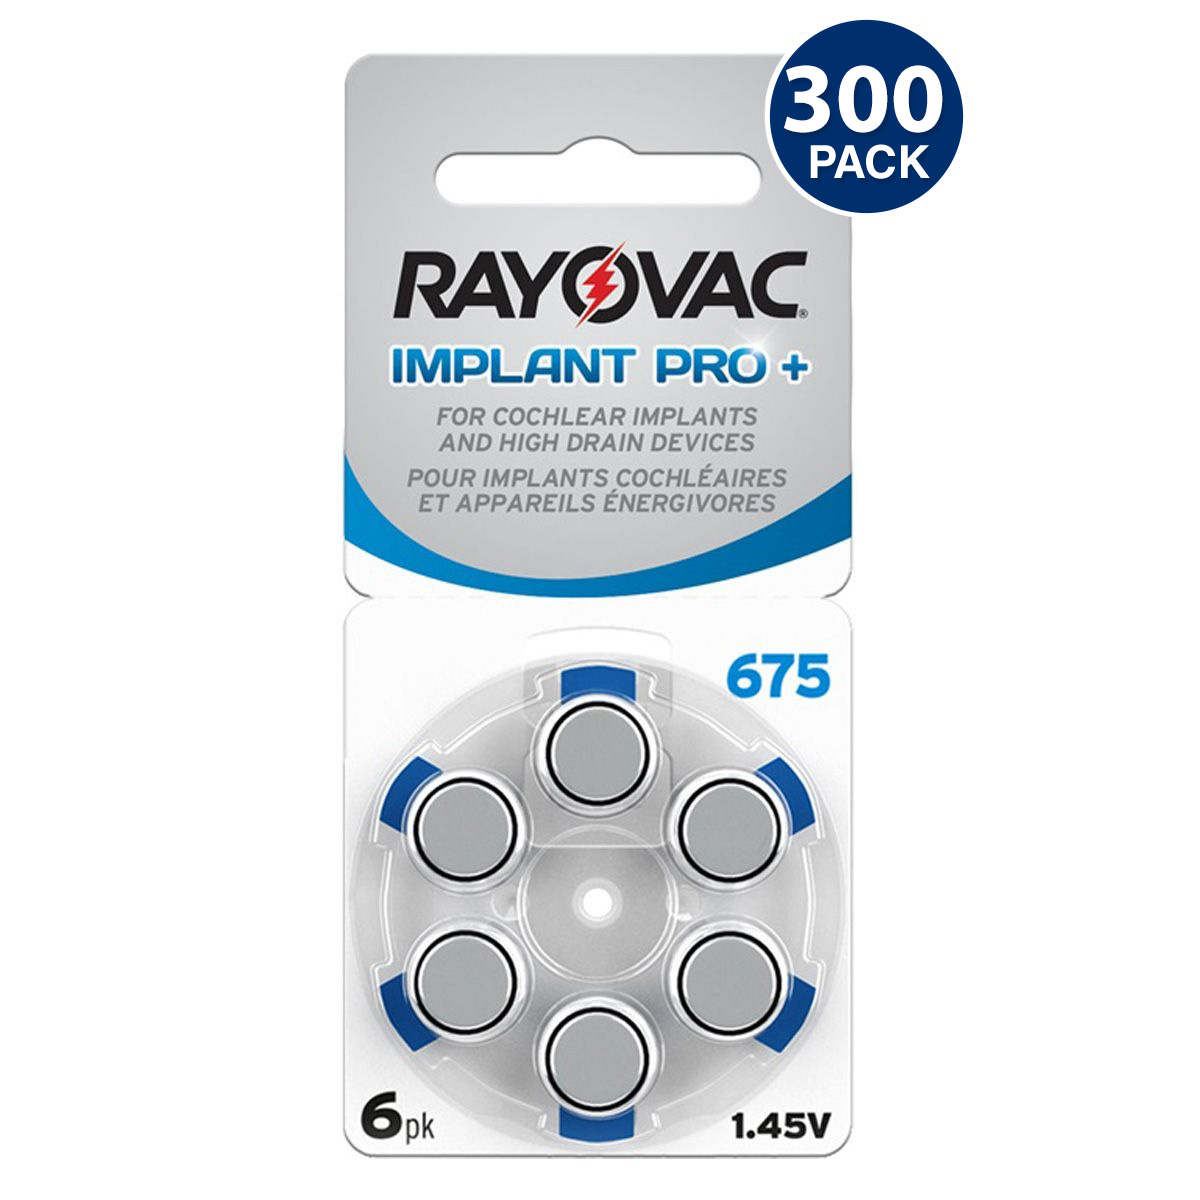 Rayovac Size 675 Cochlear Implant Pro+, Mercury Free Hearing Aid Battery (300 pcs)